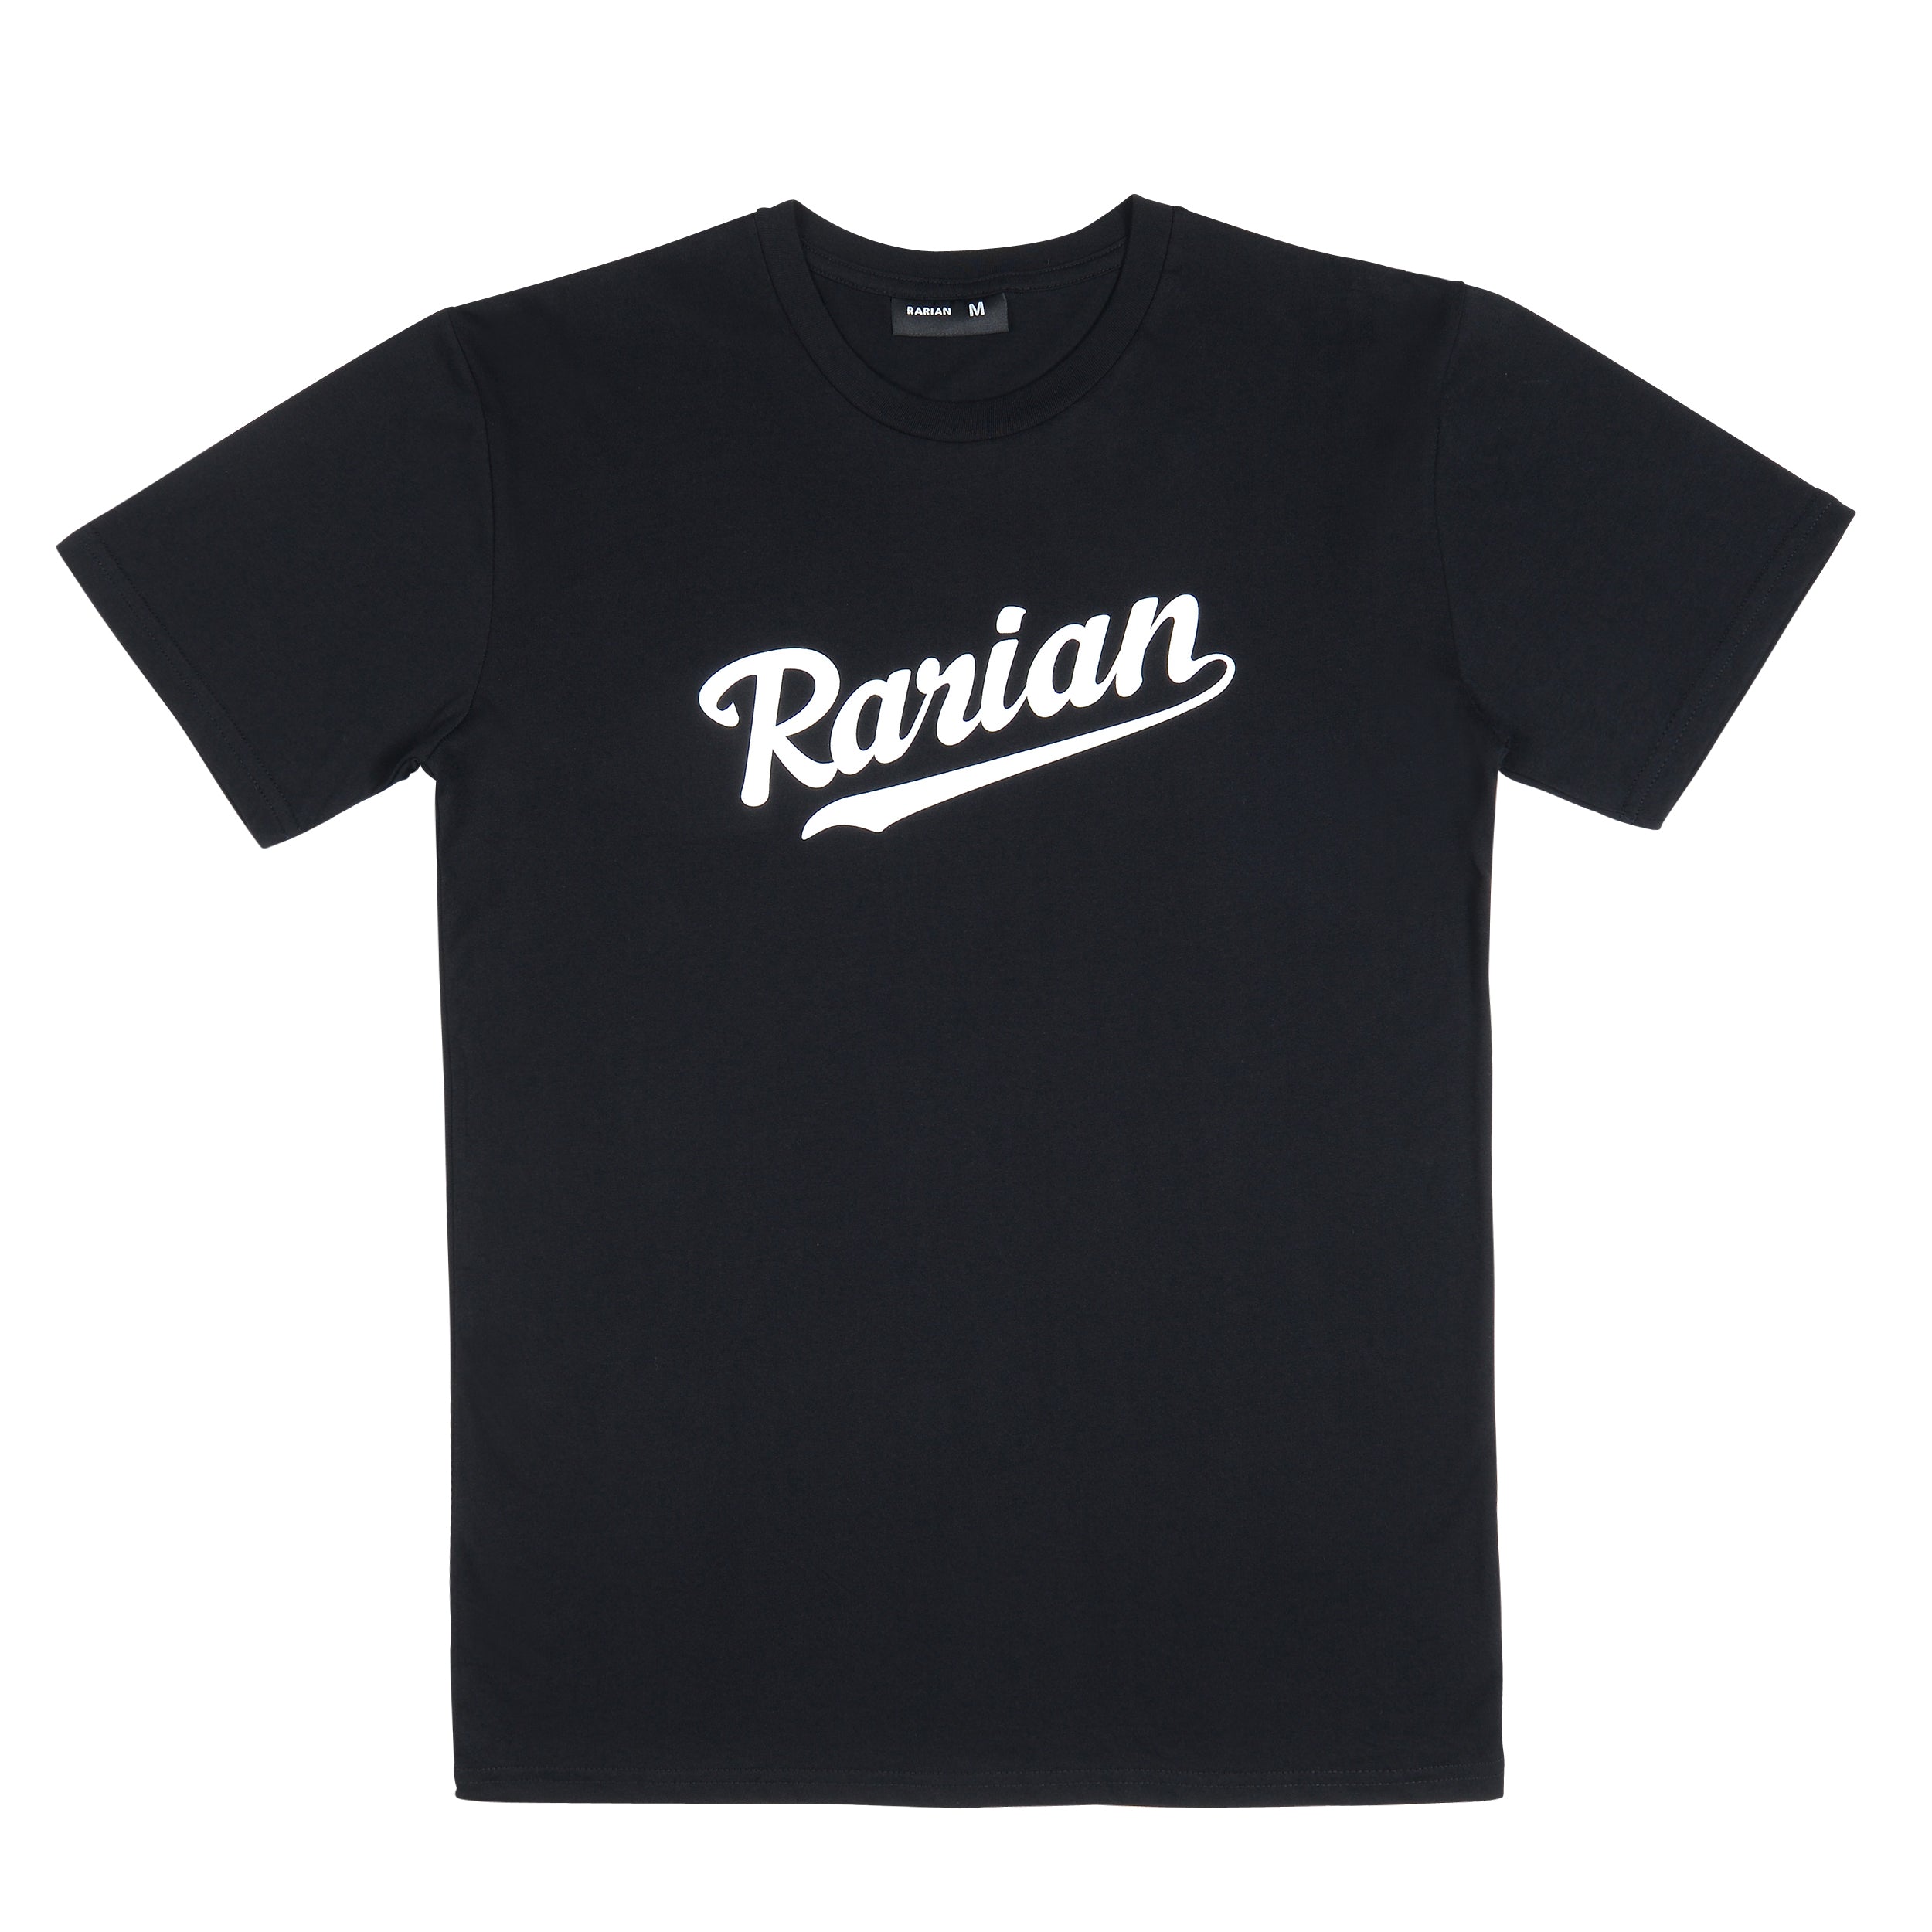 Bait Men Script Logo Baseball Jersey Shirt (Black)